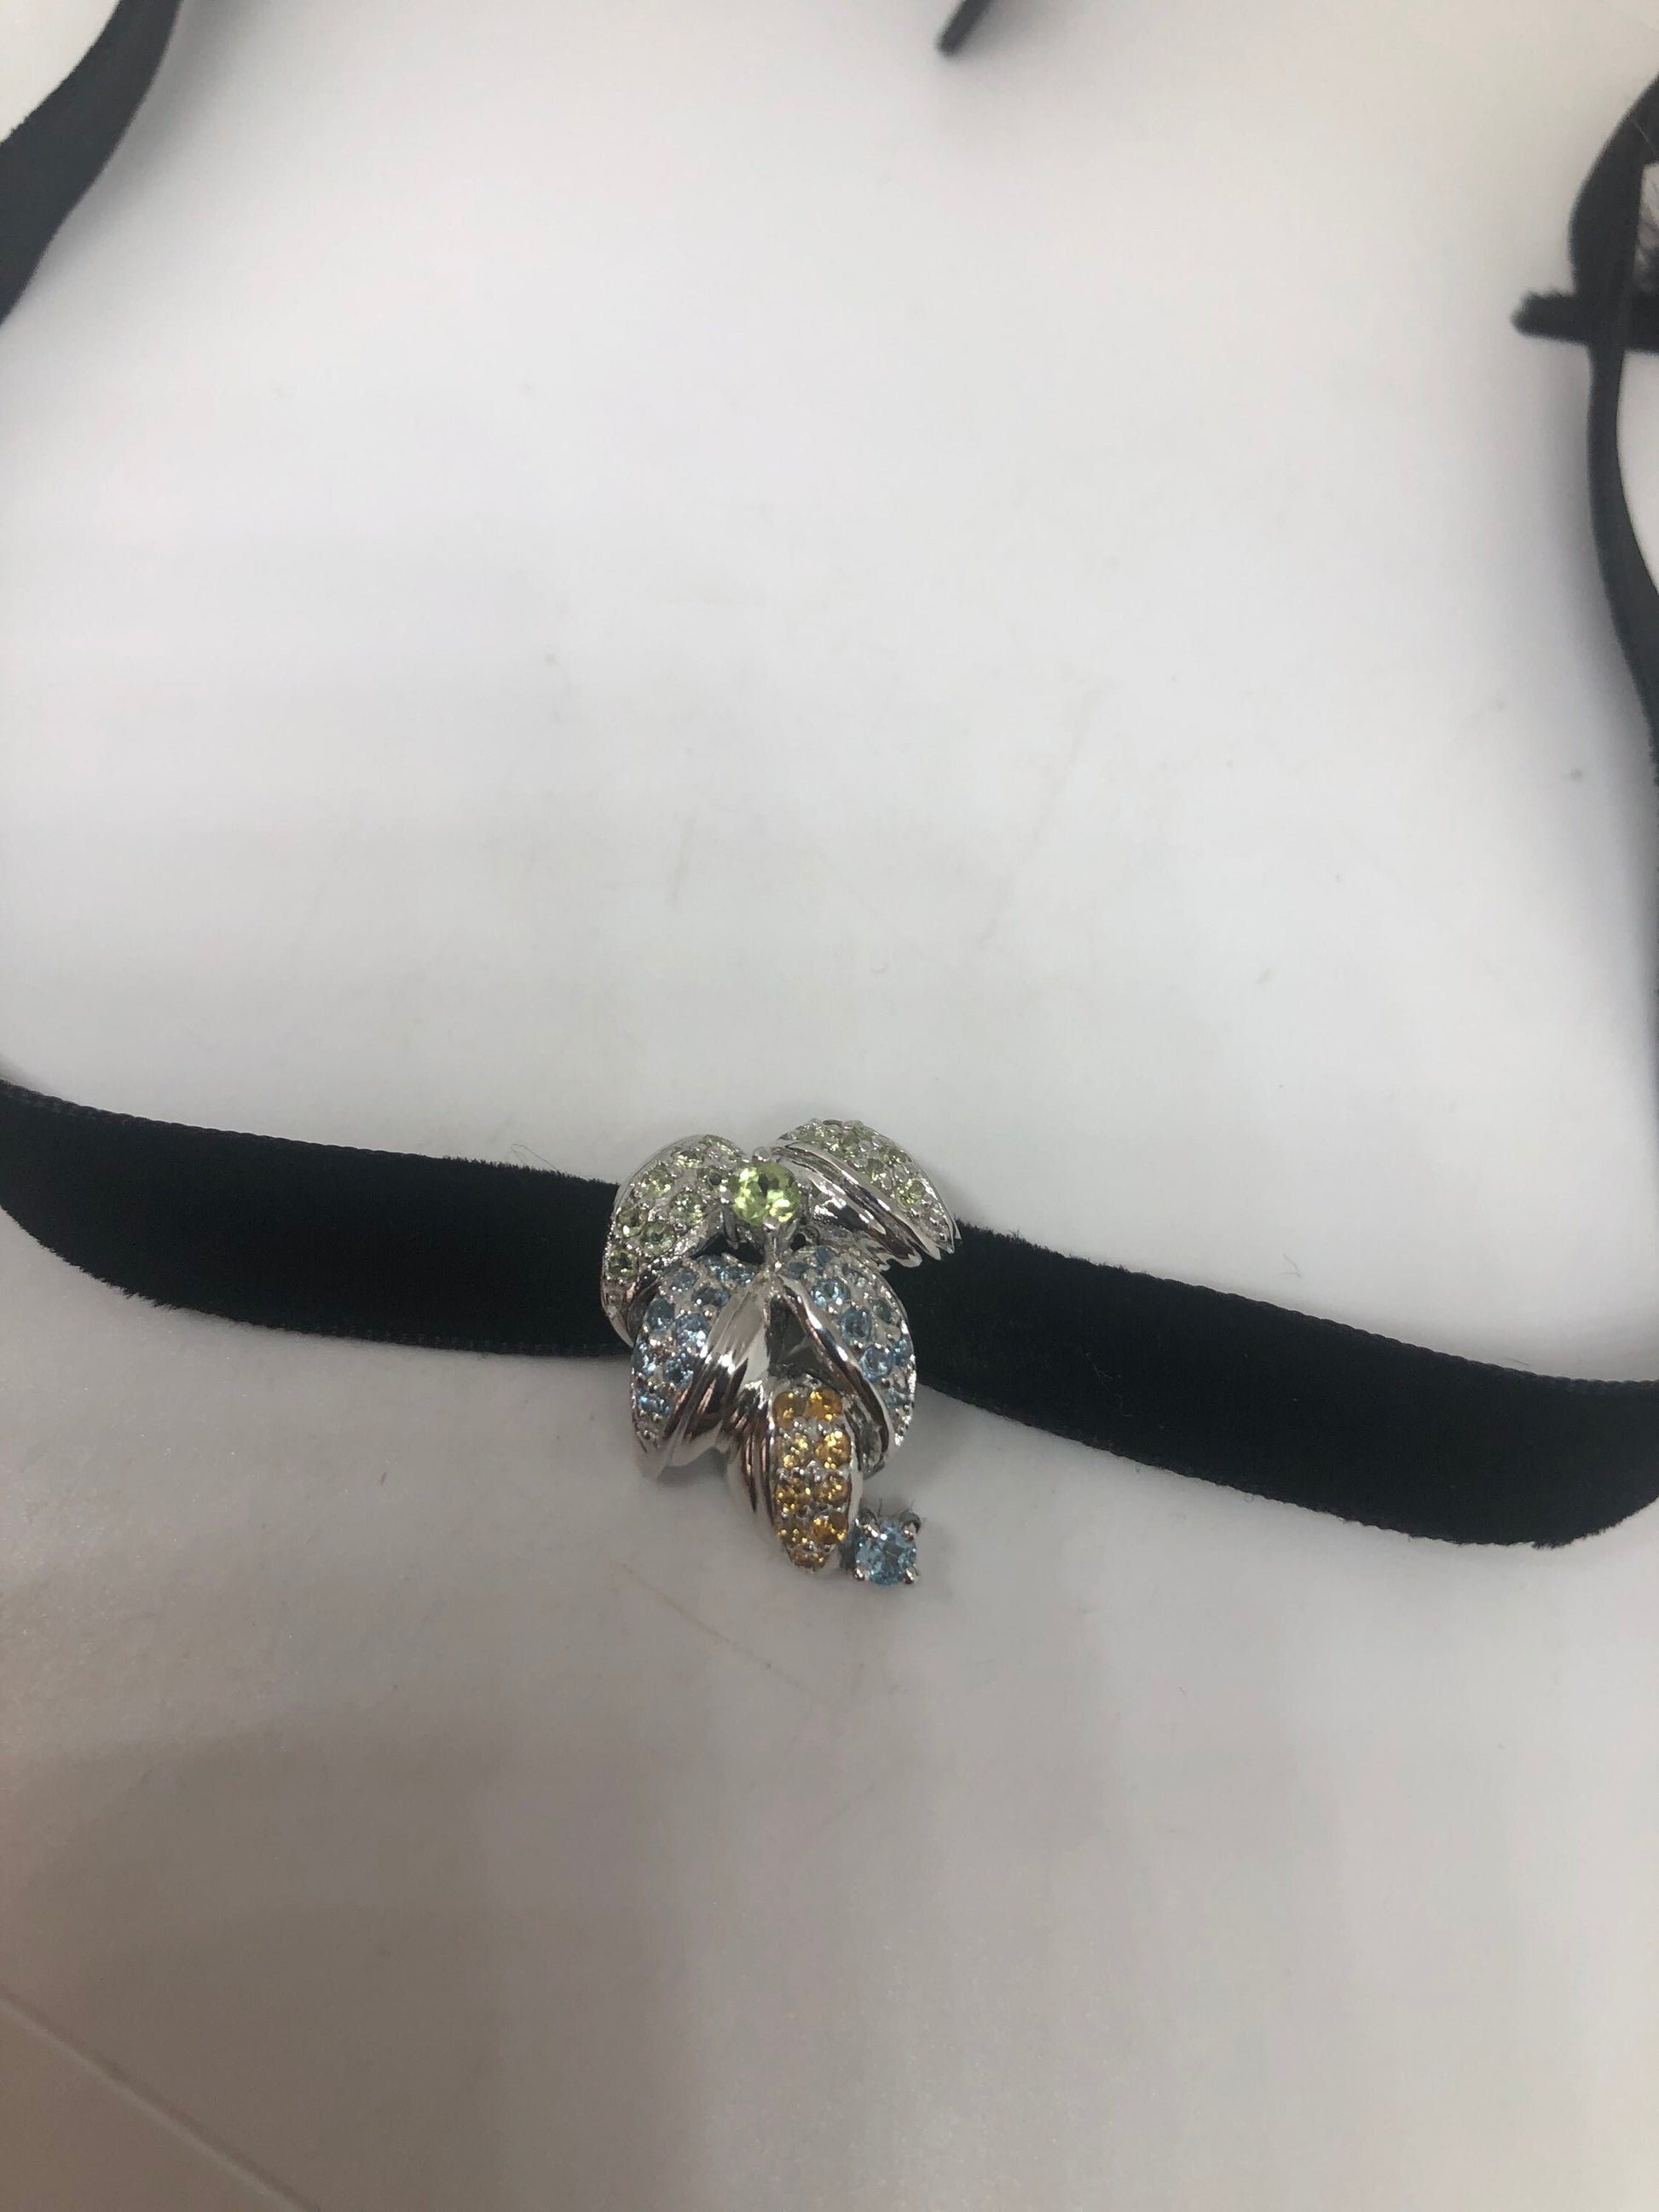 Vintage Pastel Gemstone Choker Sterling Silver Pendant Necklace